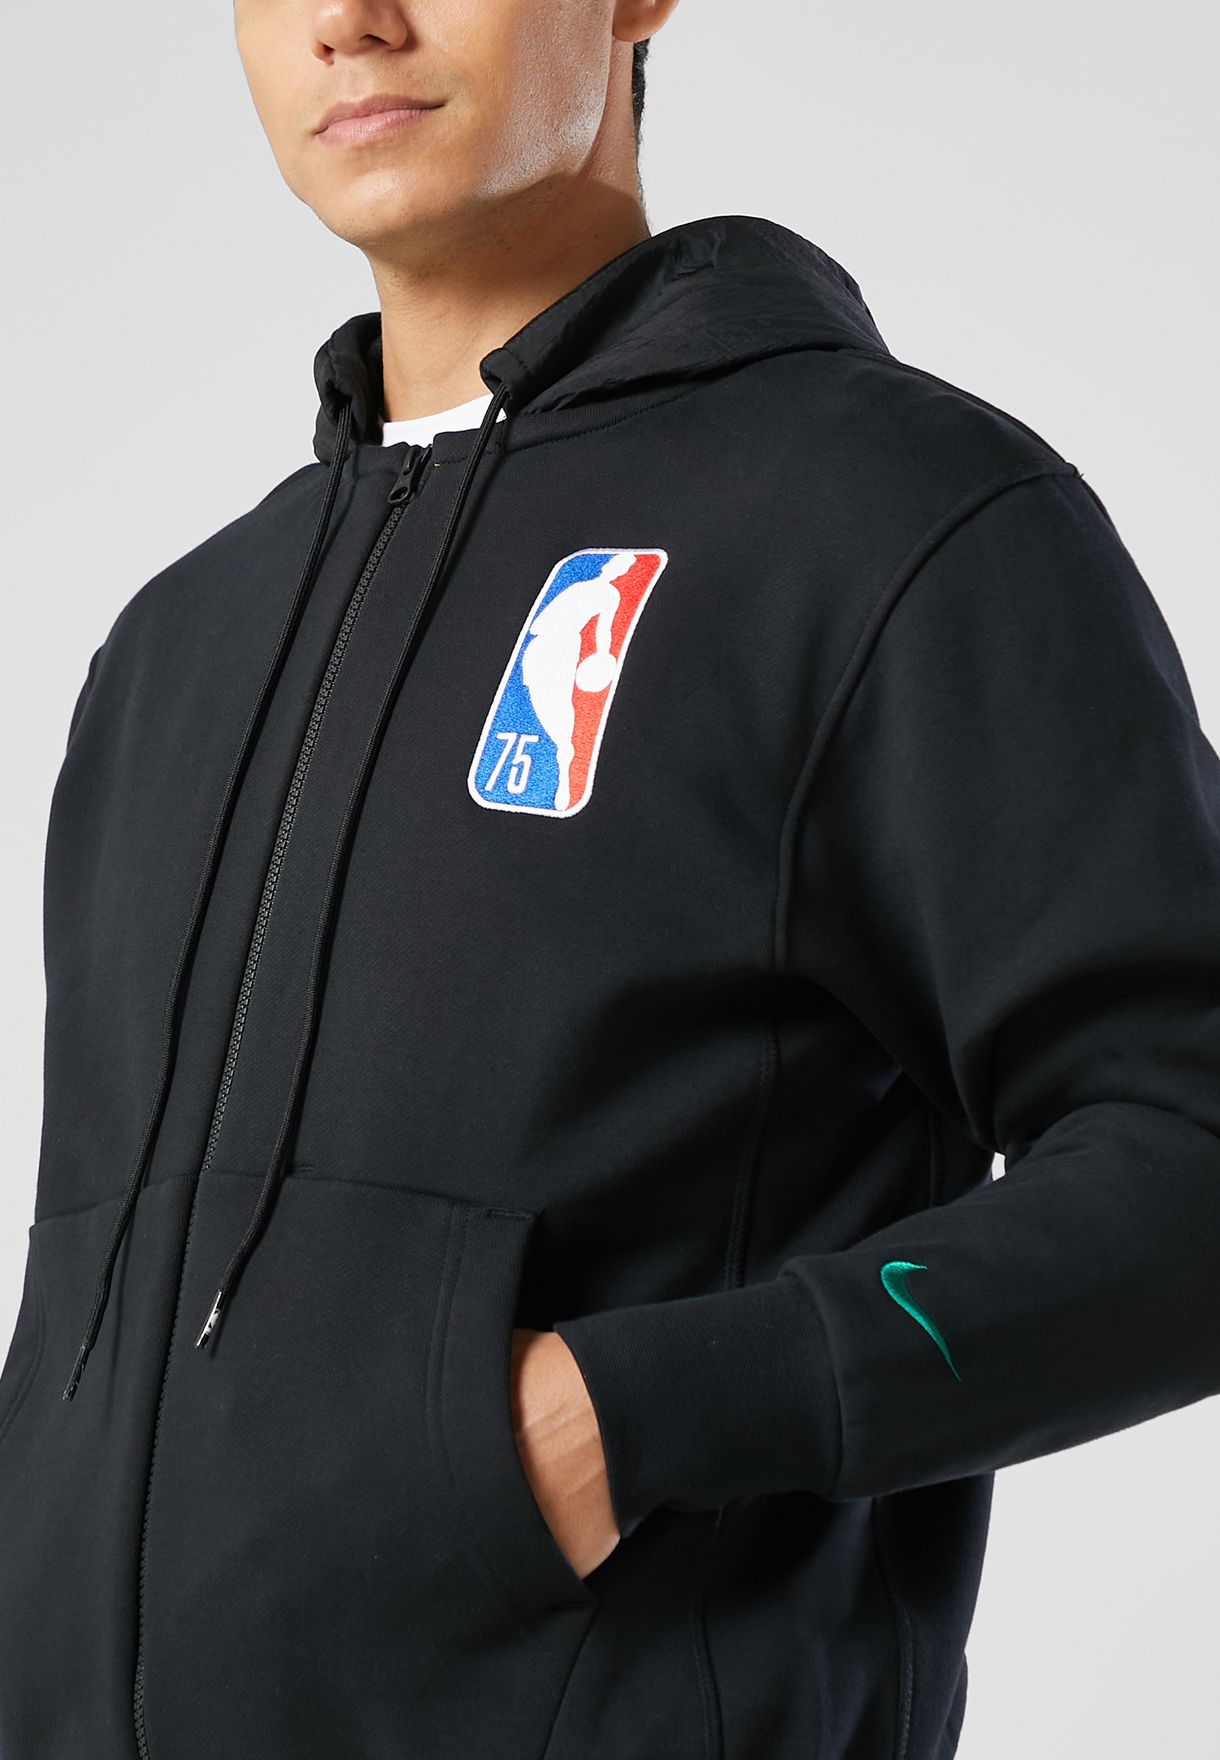 Celtics Fleece Sweatshirt